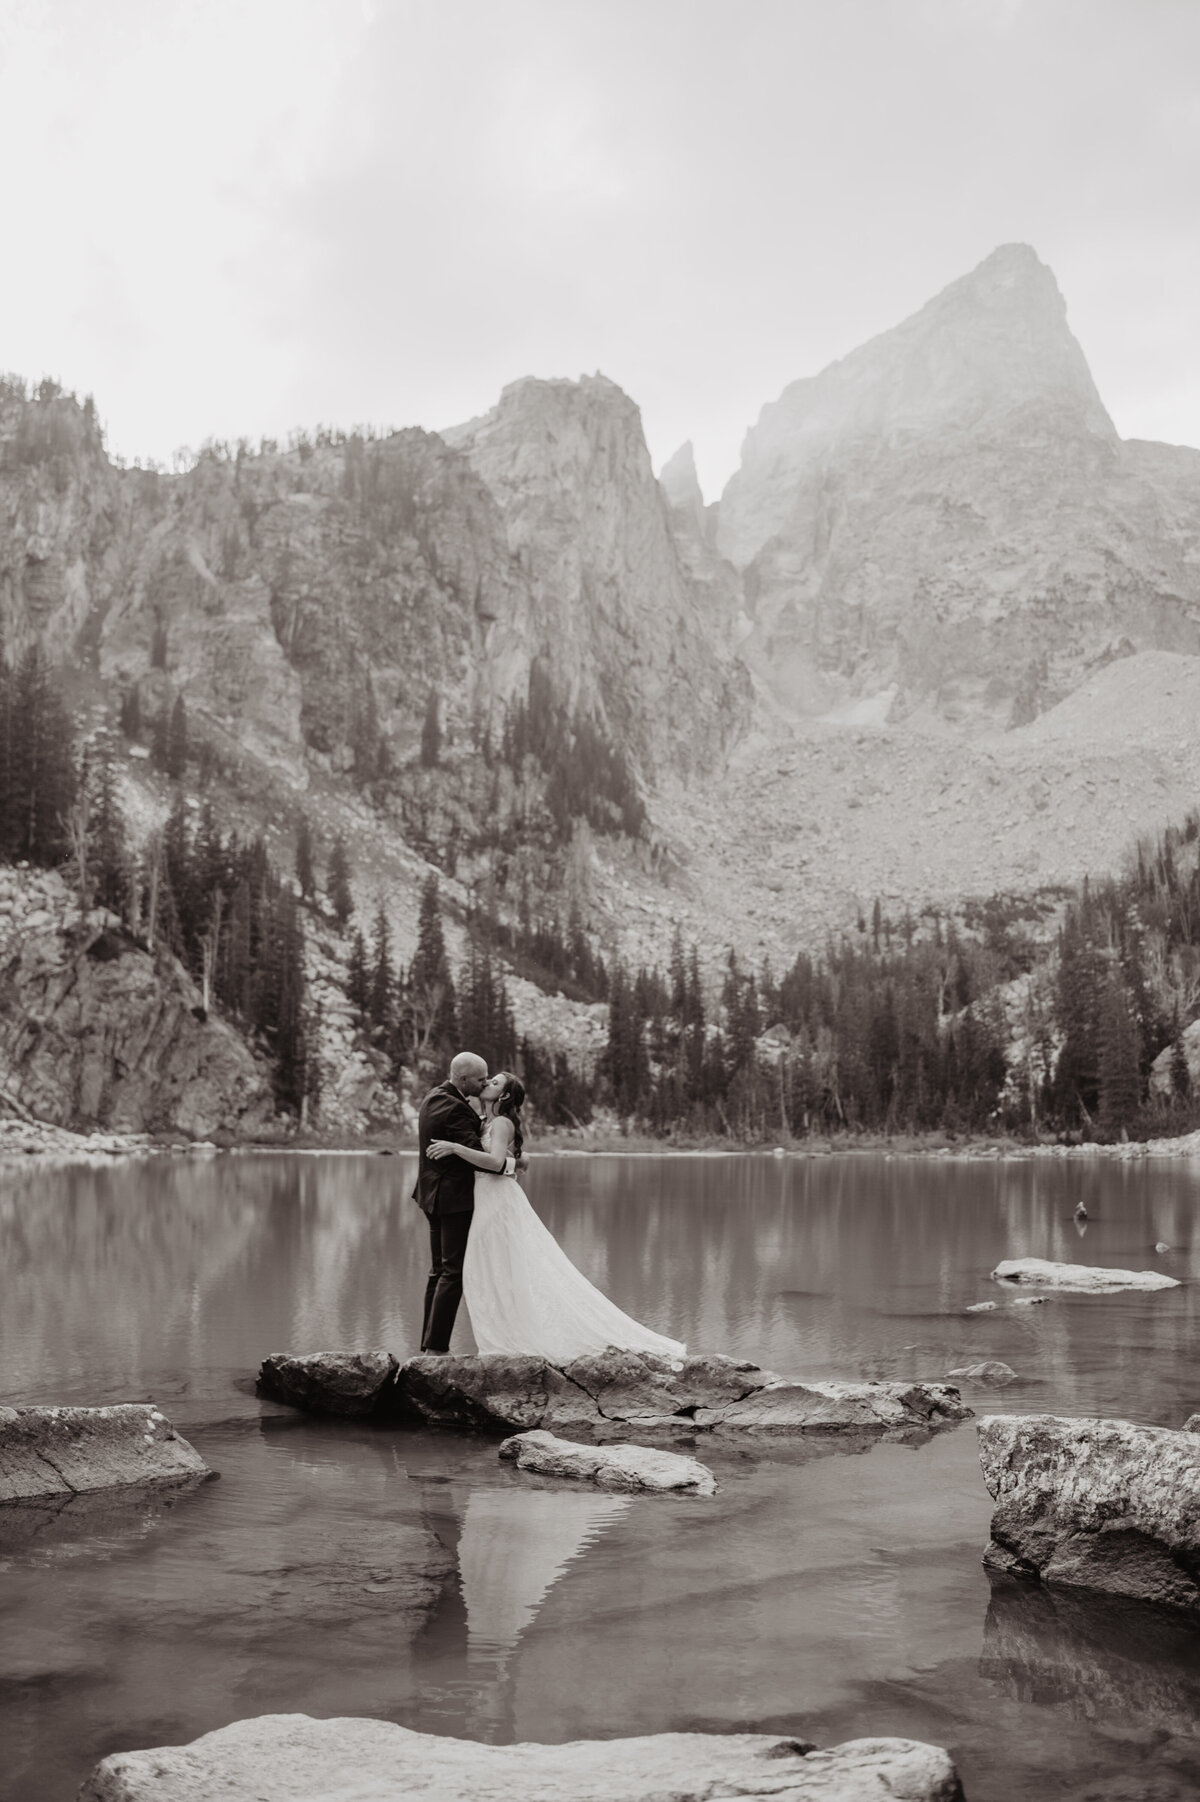 Jackson Hole Photographers capture couple kissing in black and white portrait